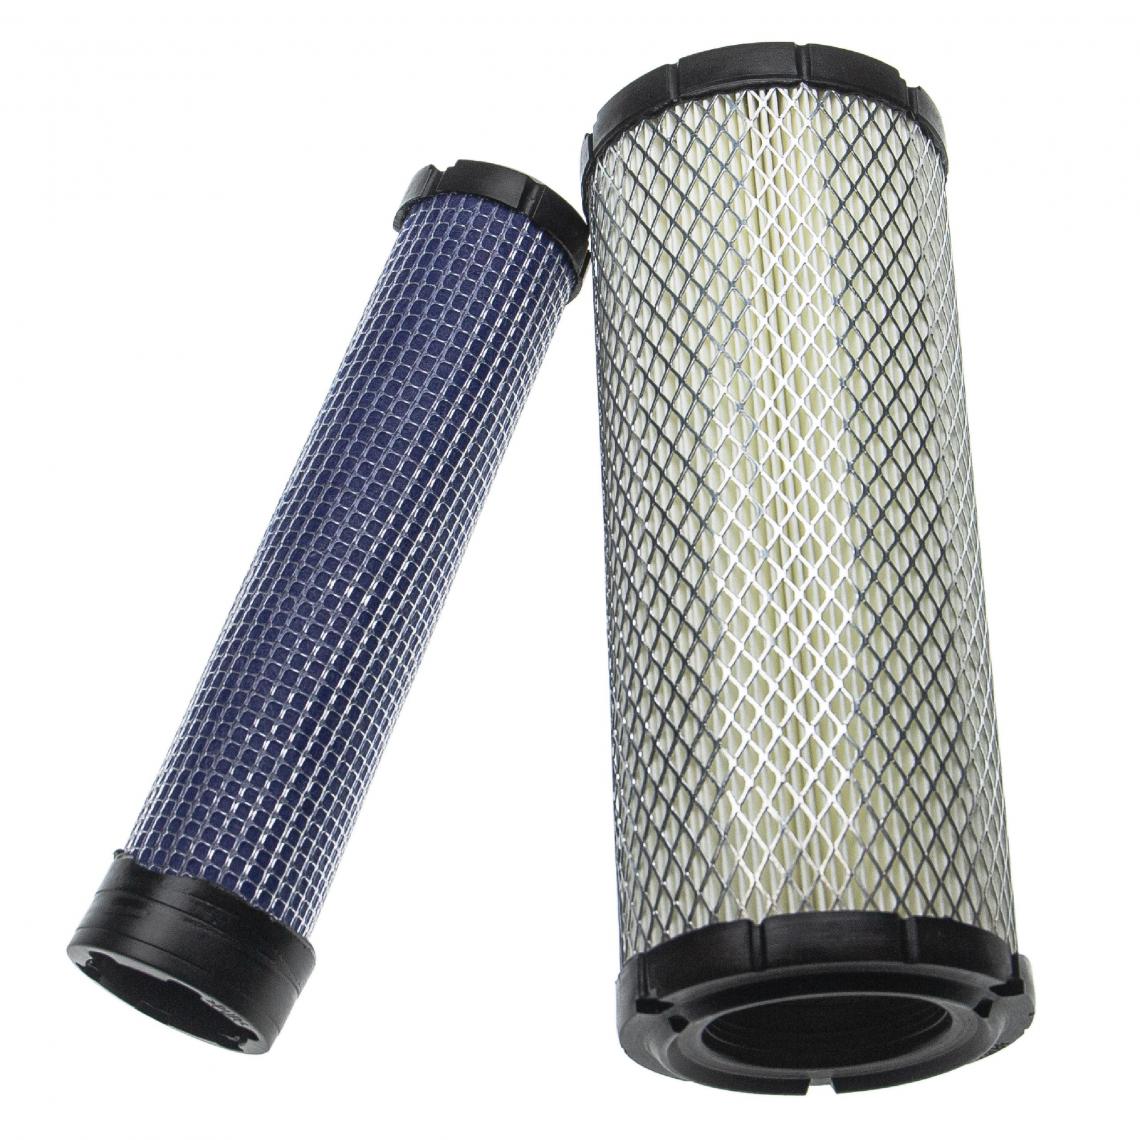 Vhbw - vhbw Lot de filtres compatible avec Yanmar 4TNE88-SA (2.2L) Engines, V4-5, V4-5A Loader engin de chantier; 1x filtre interne, 1x filtre extérieur - Autre appareil de mesure